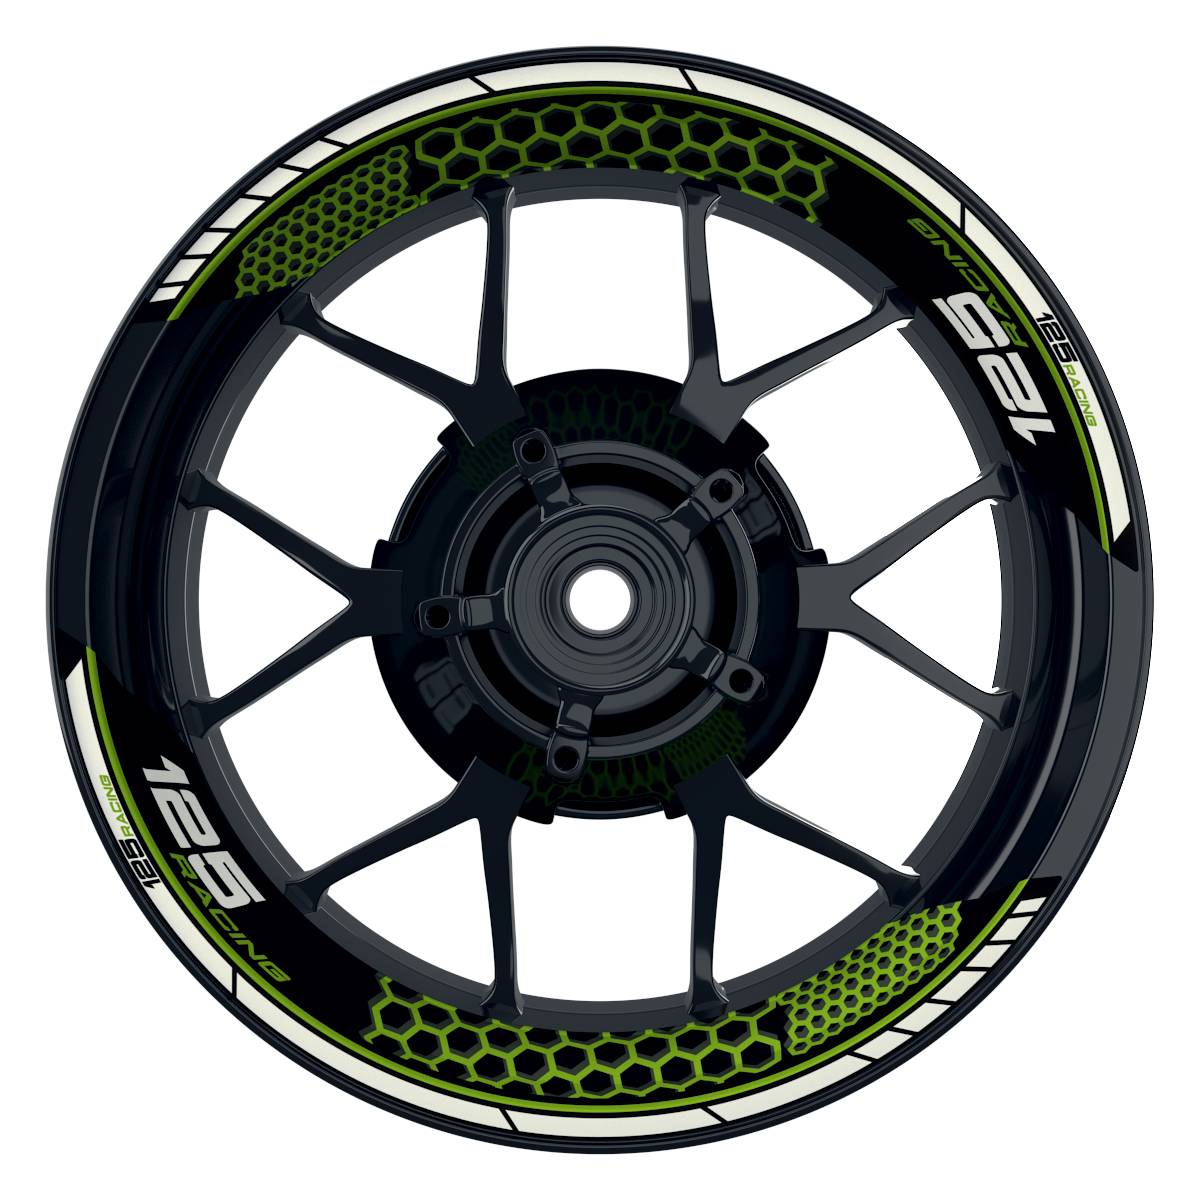 KTM Racing 125 Hexagon schwarz gruen Frontansicht